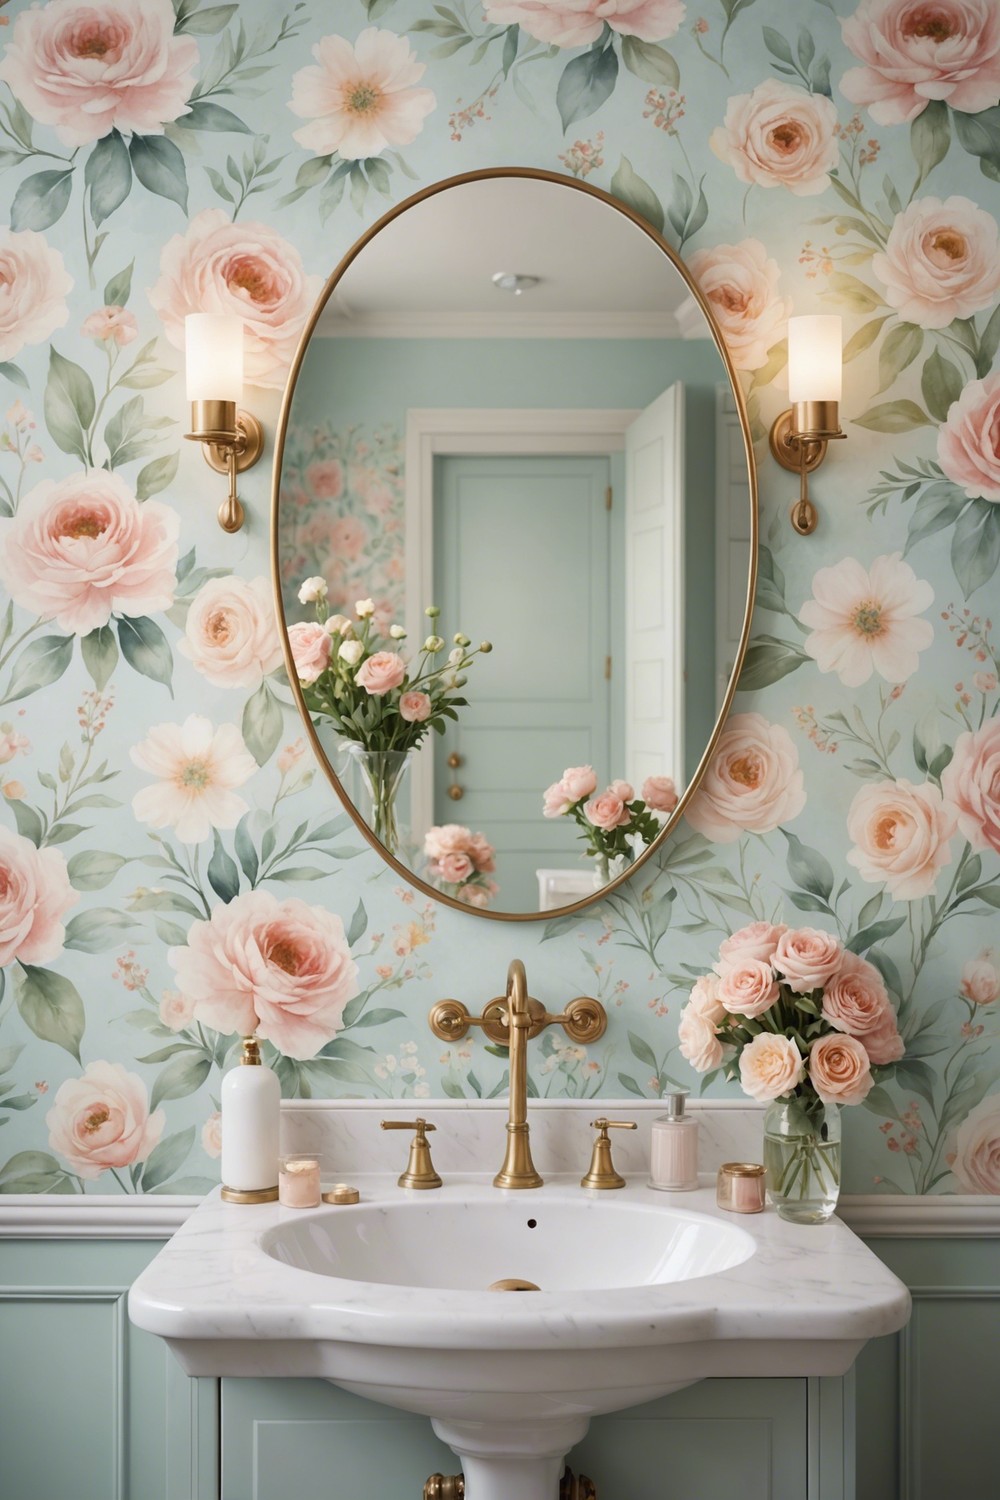 Soft Focus: Blurry Floral Patterns for a Dreamy Bathroom